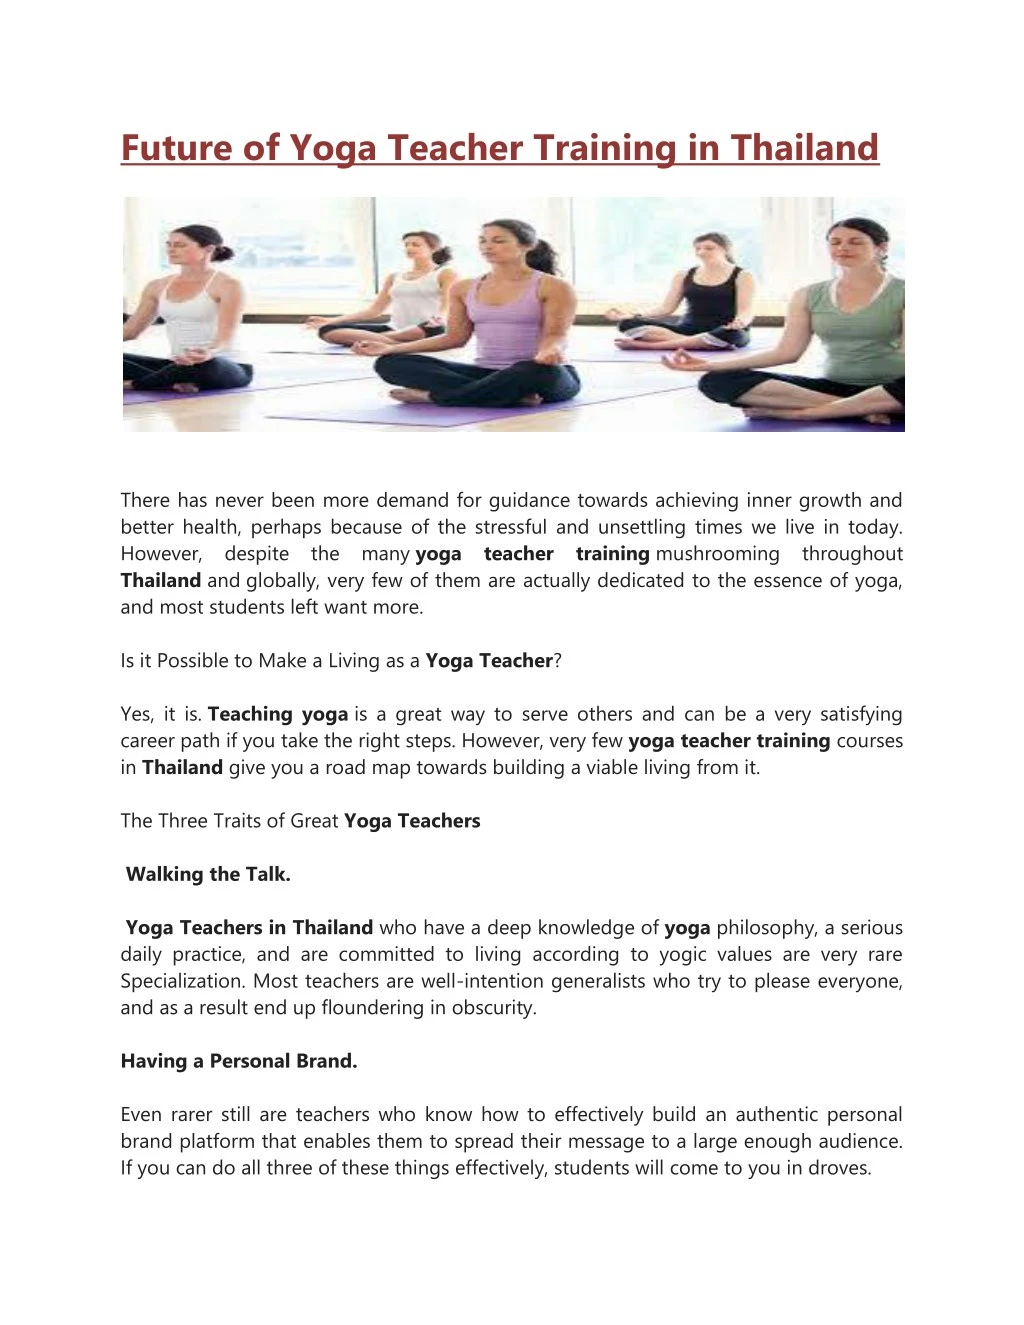 PPT - Future of Yoga Teacher Training in Thailand PowerPoint Presentation -  ID:7932379